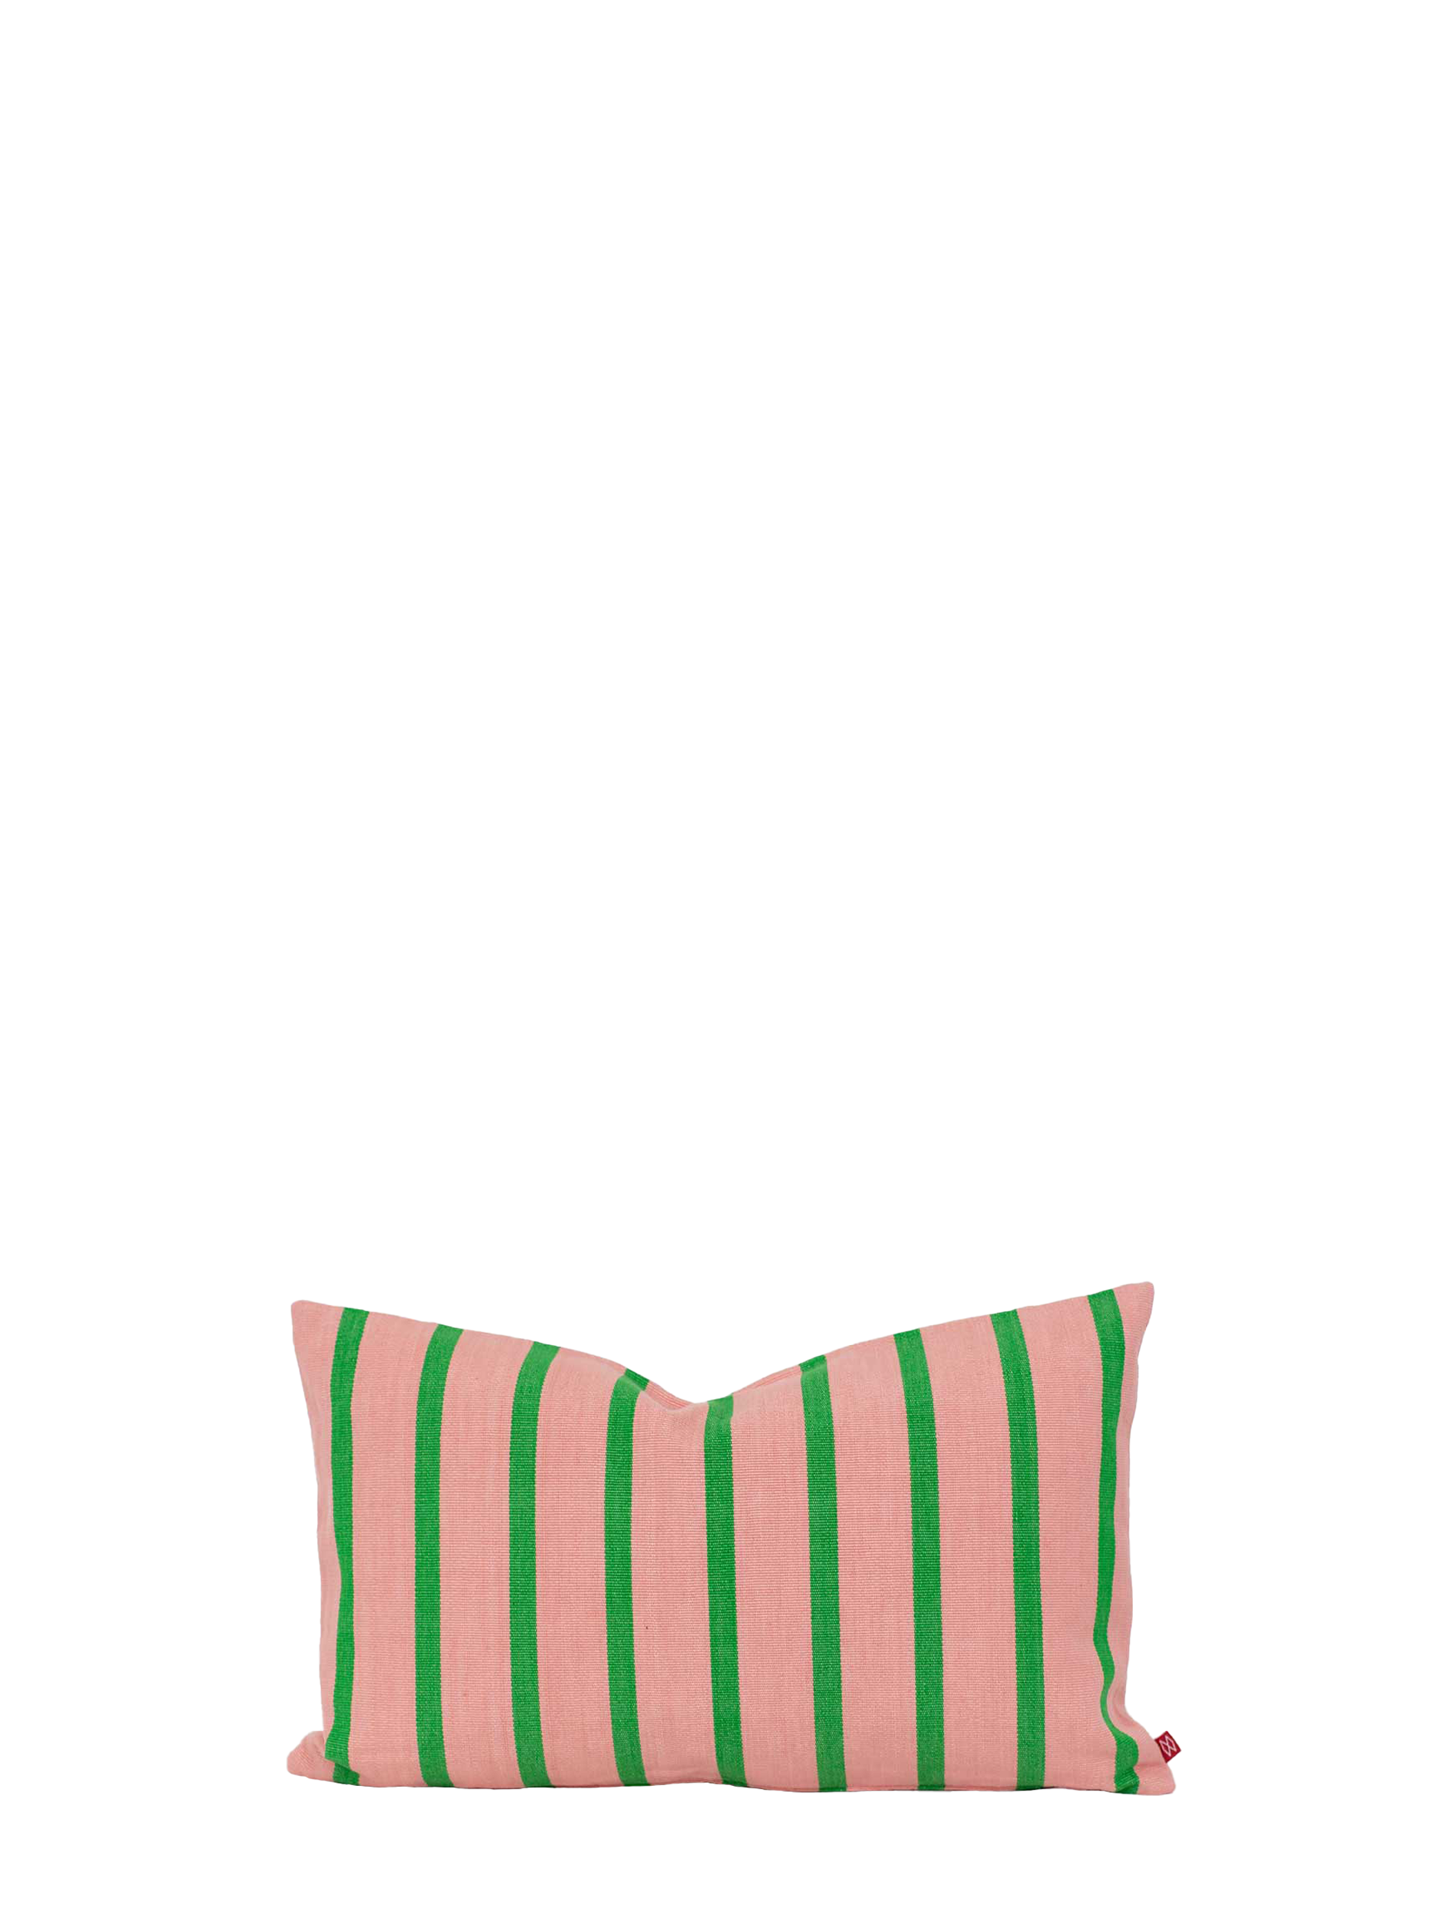 America Small Cushion (30x50cm), pink/green